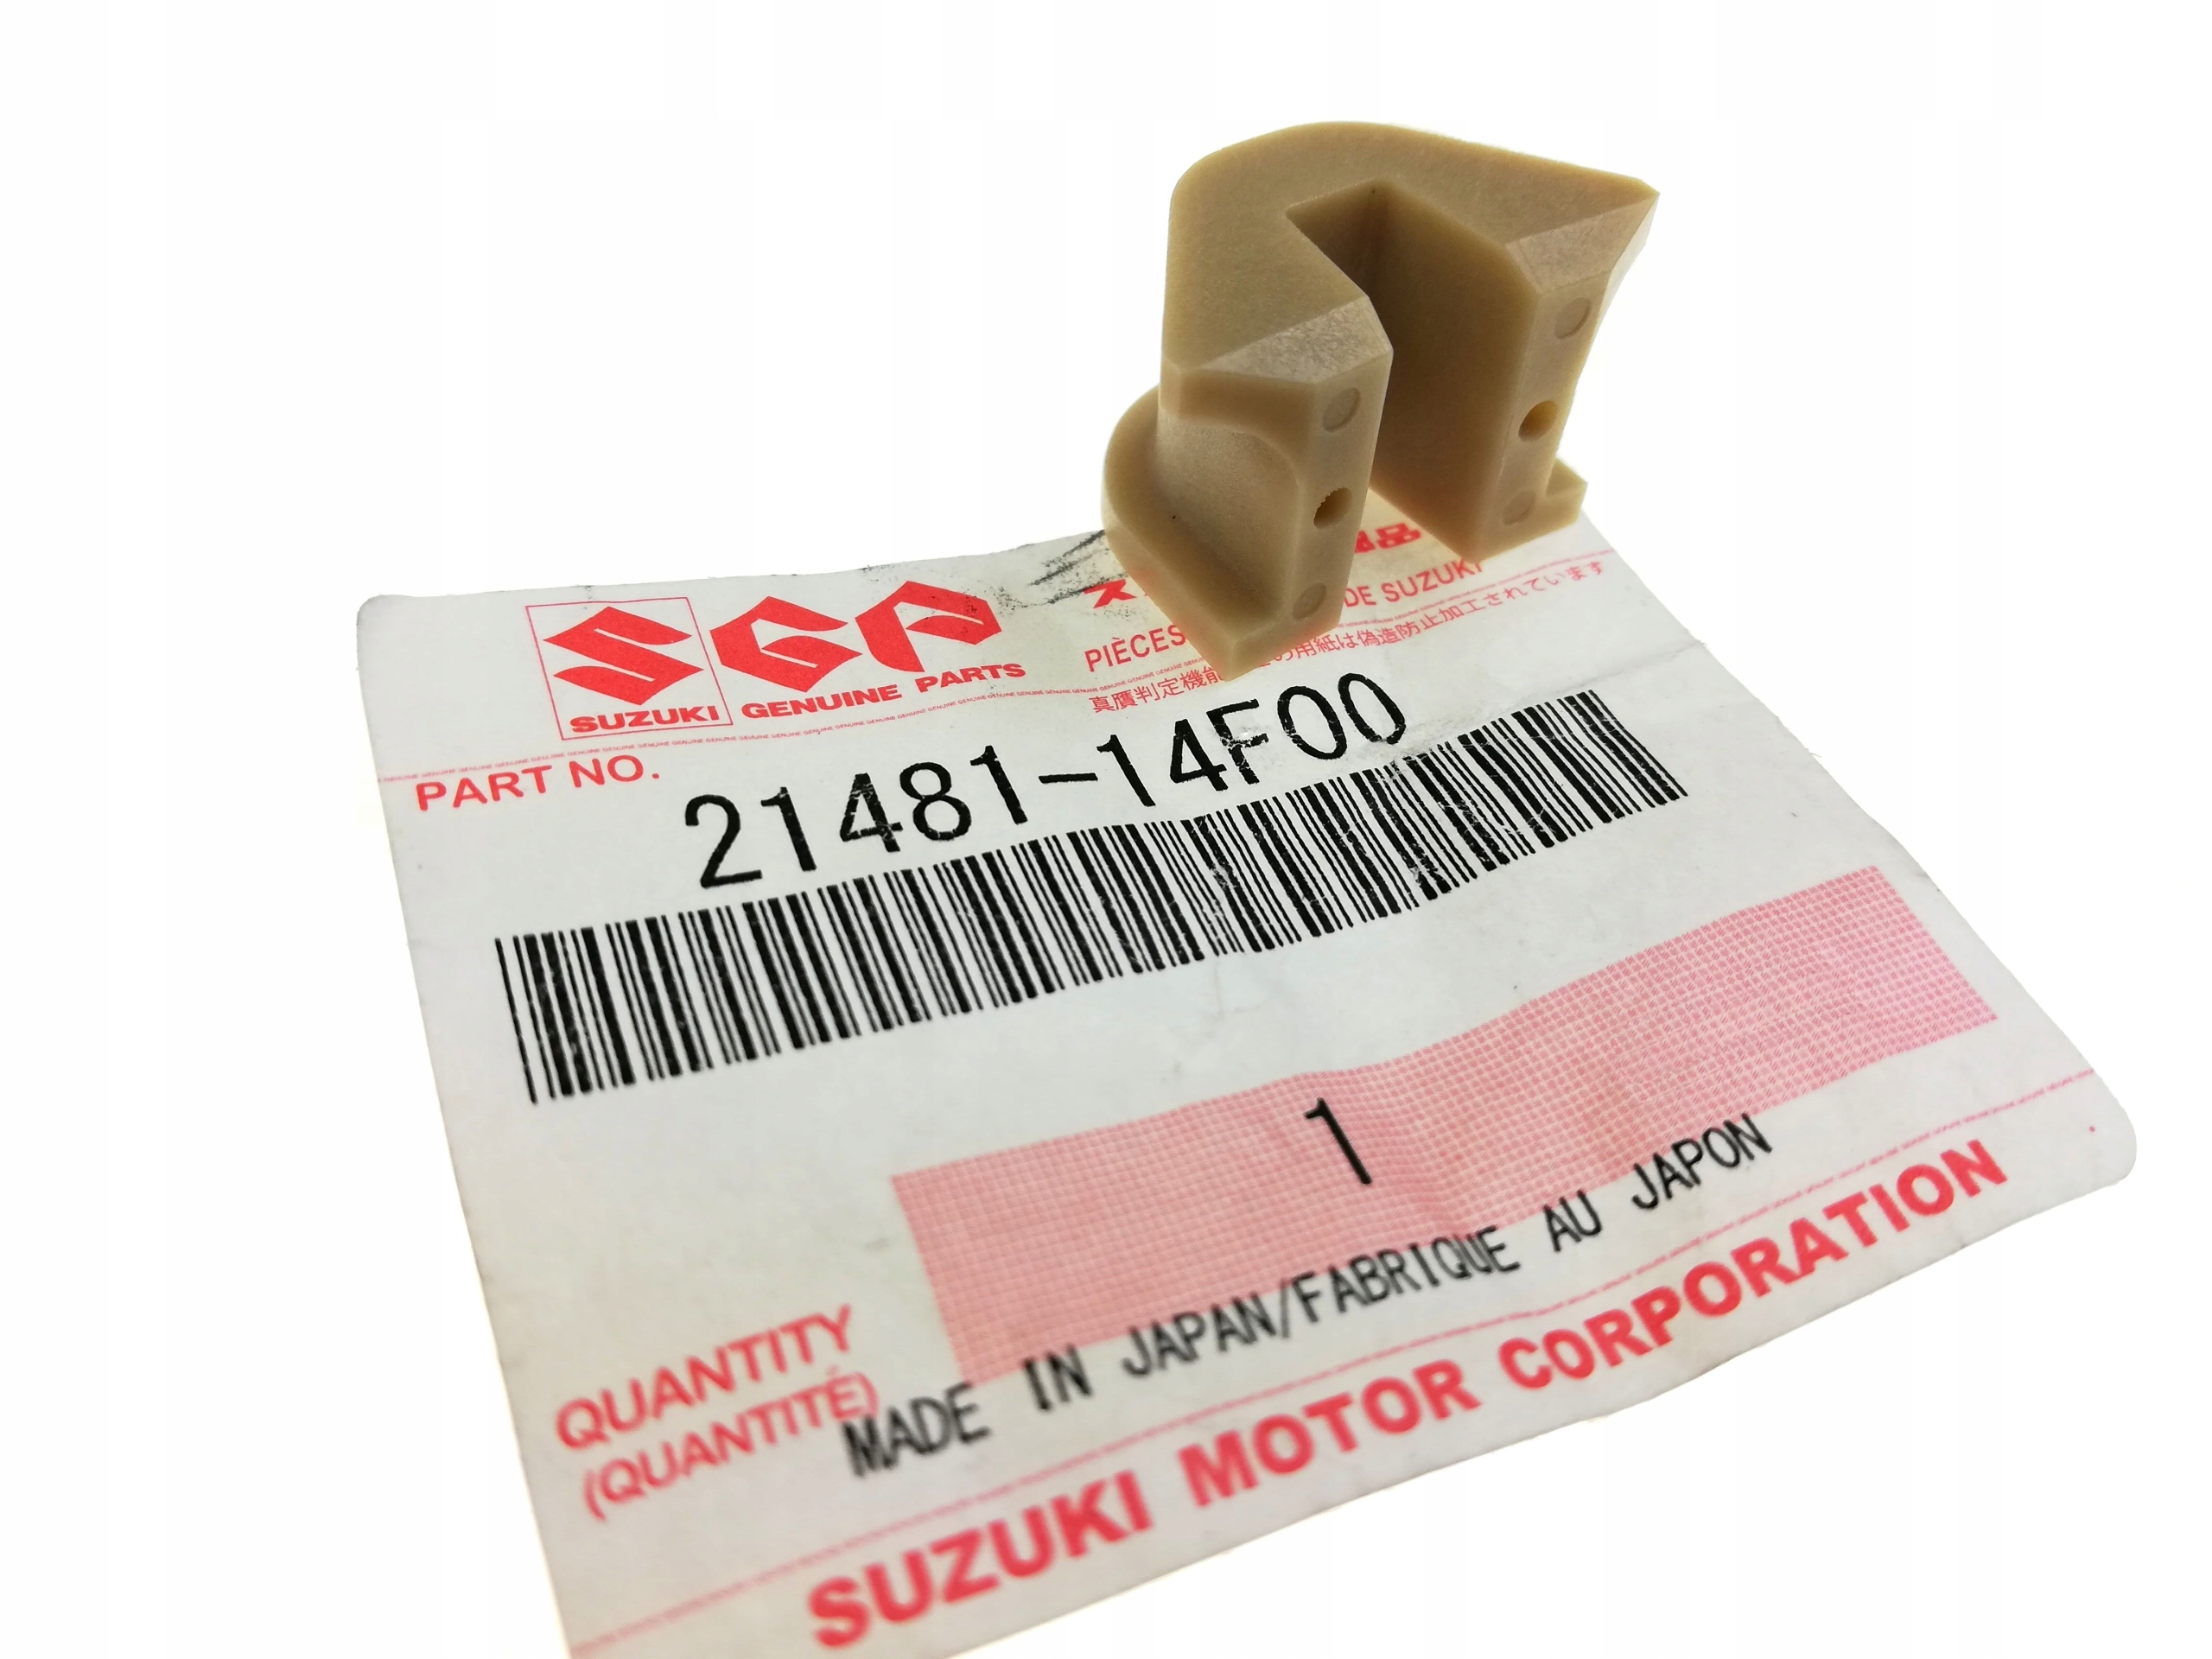 21481-14f00-000 cursore tassello singolo per variatore originale suzuki burgman 125-150-200-250-400